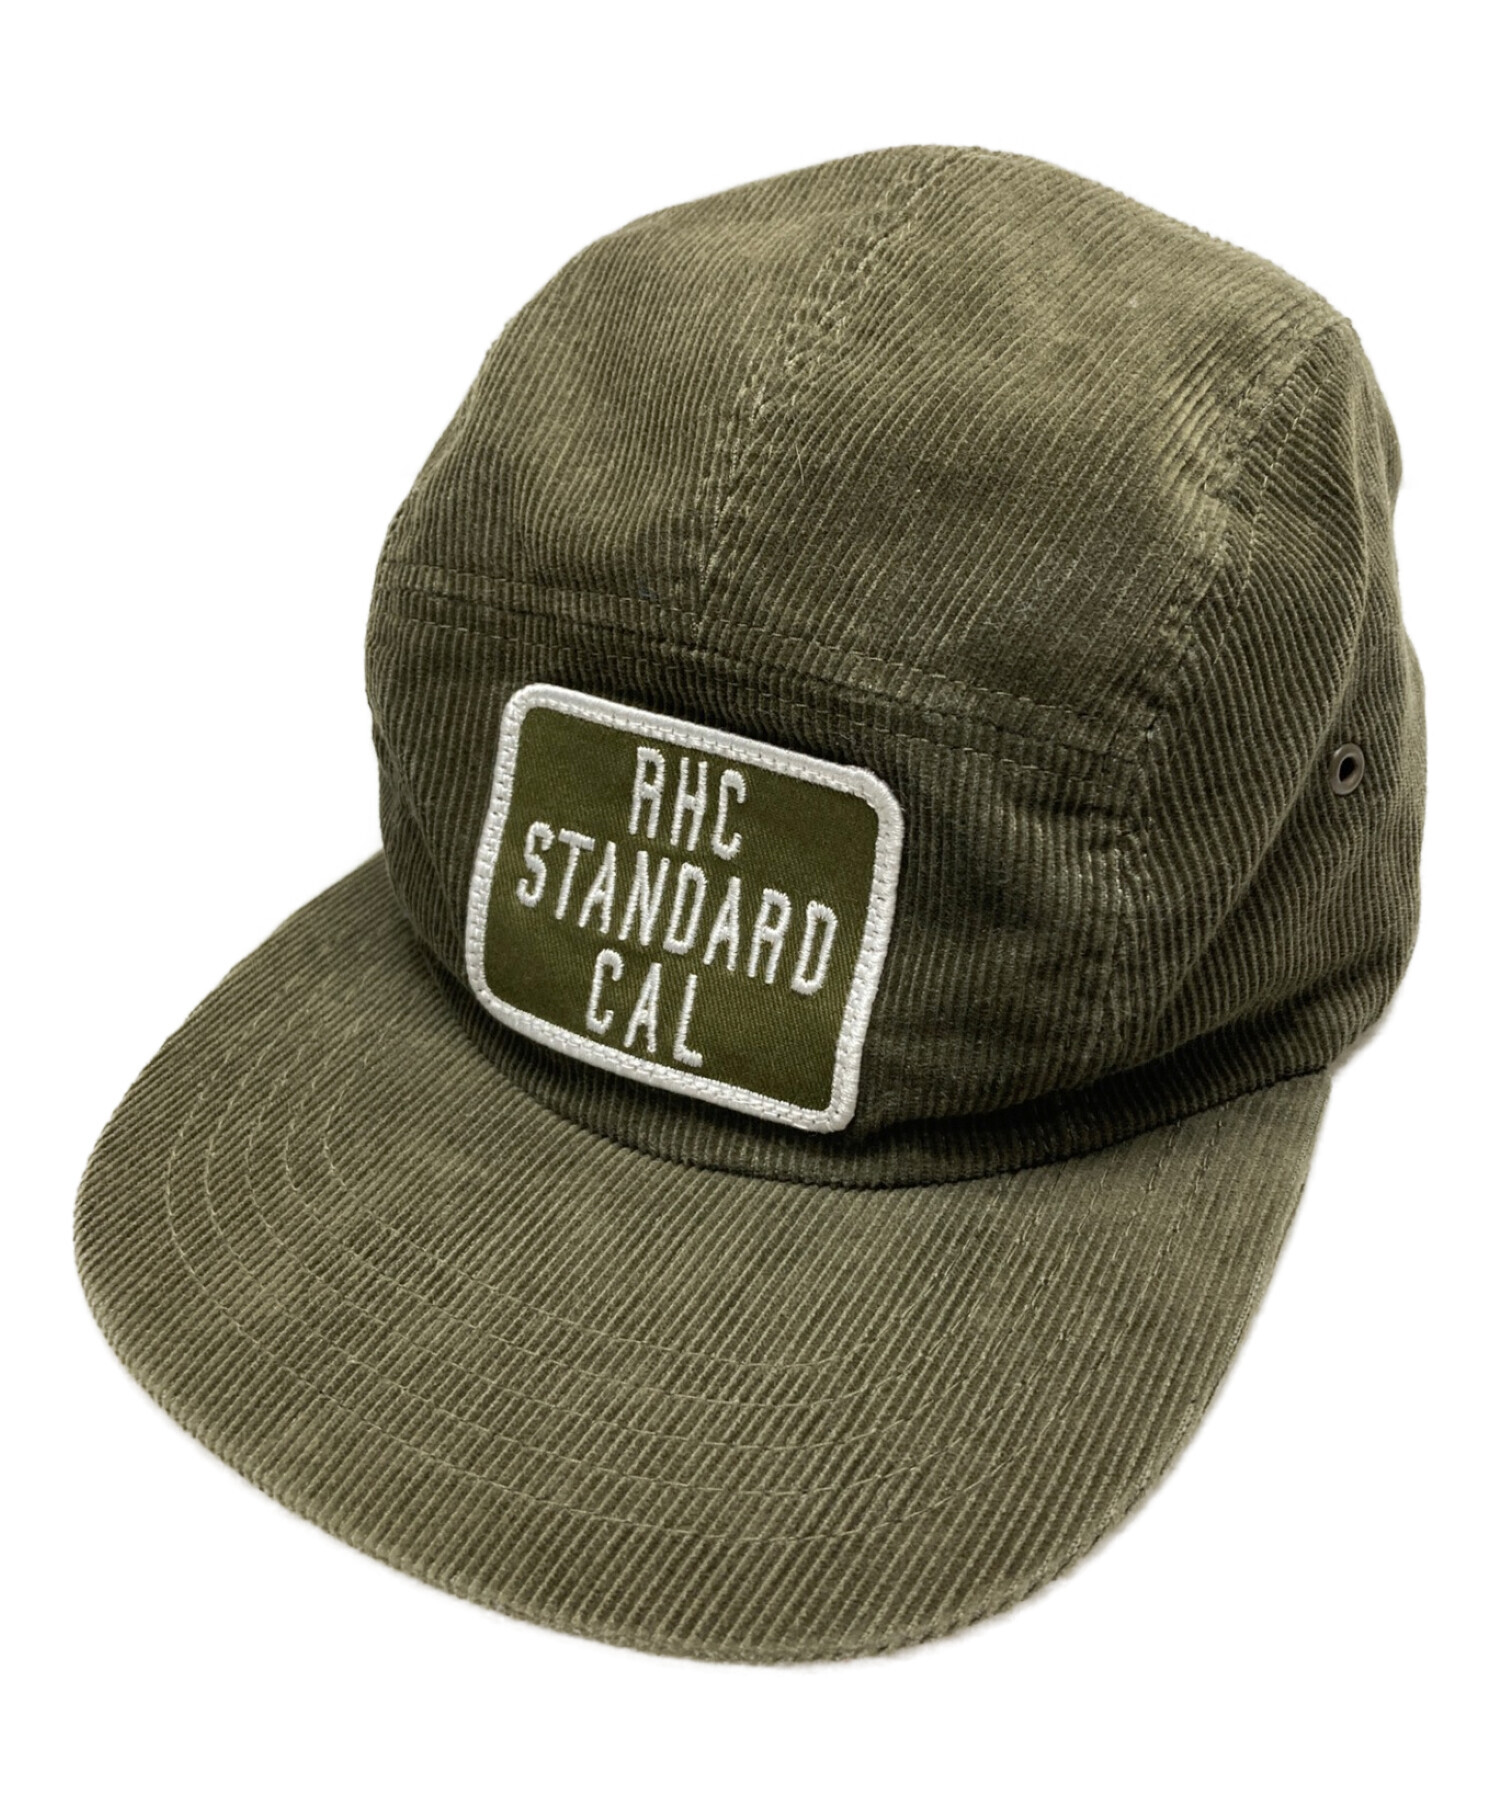 RHC × STANDARDCALIFORNIA CAP